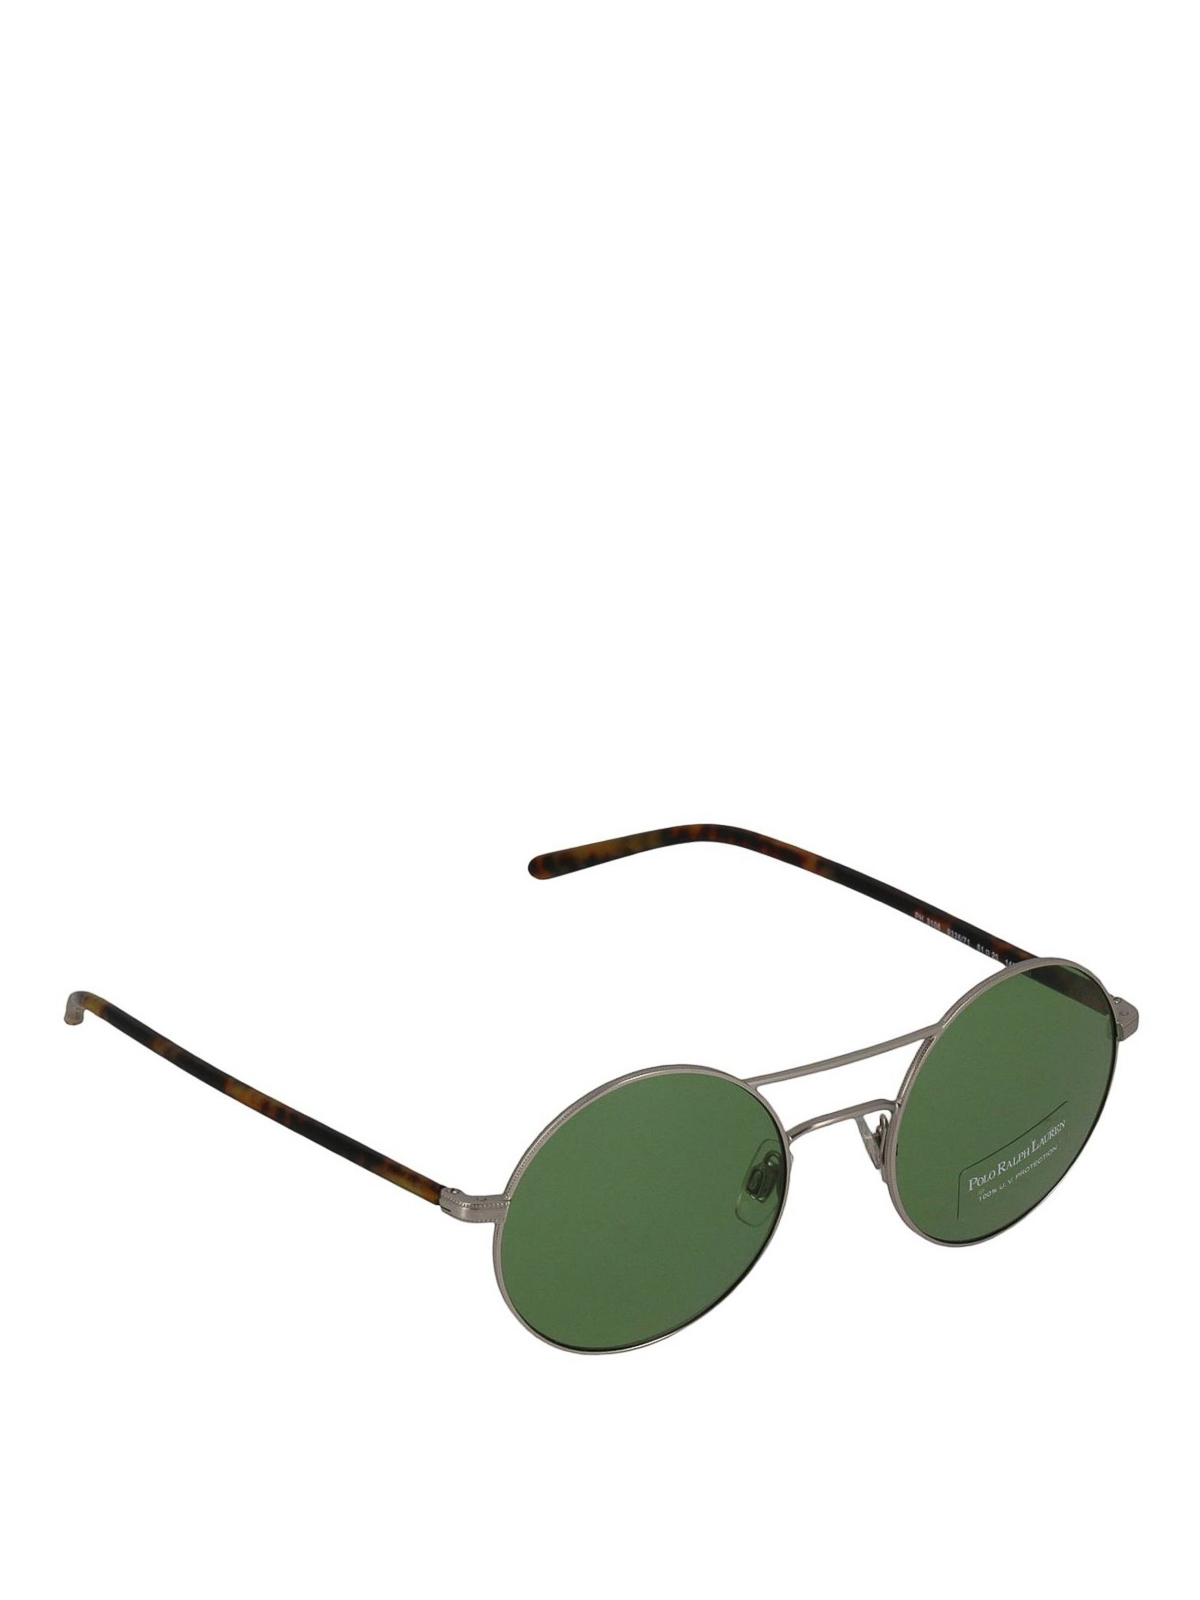 polo round sunglasses